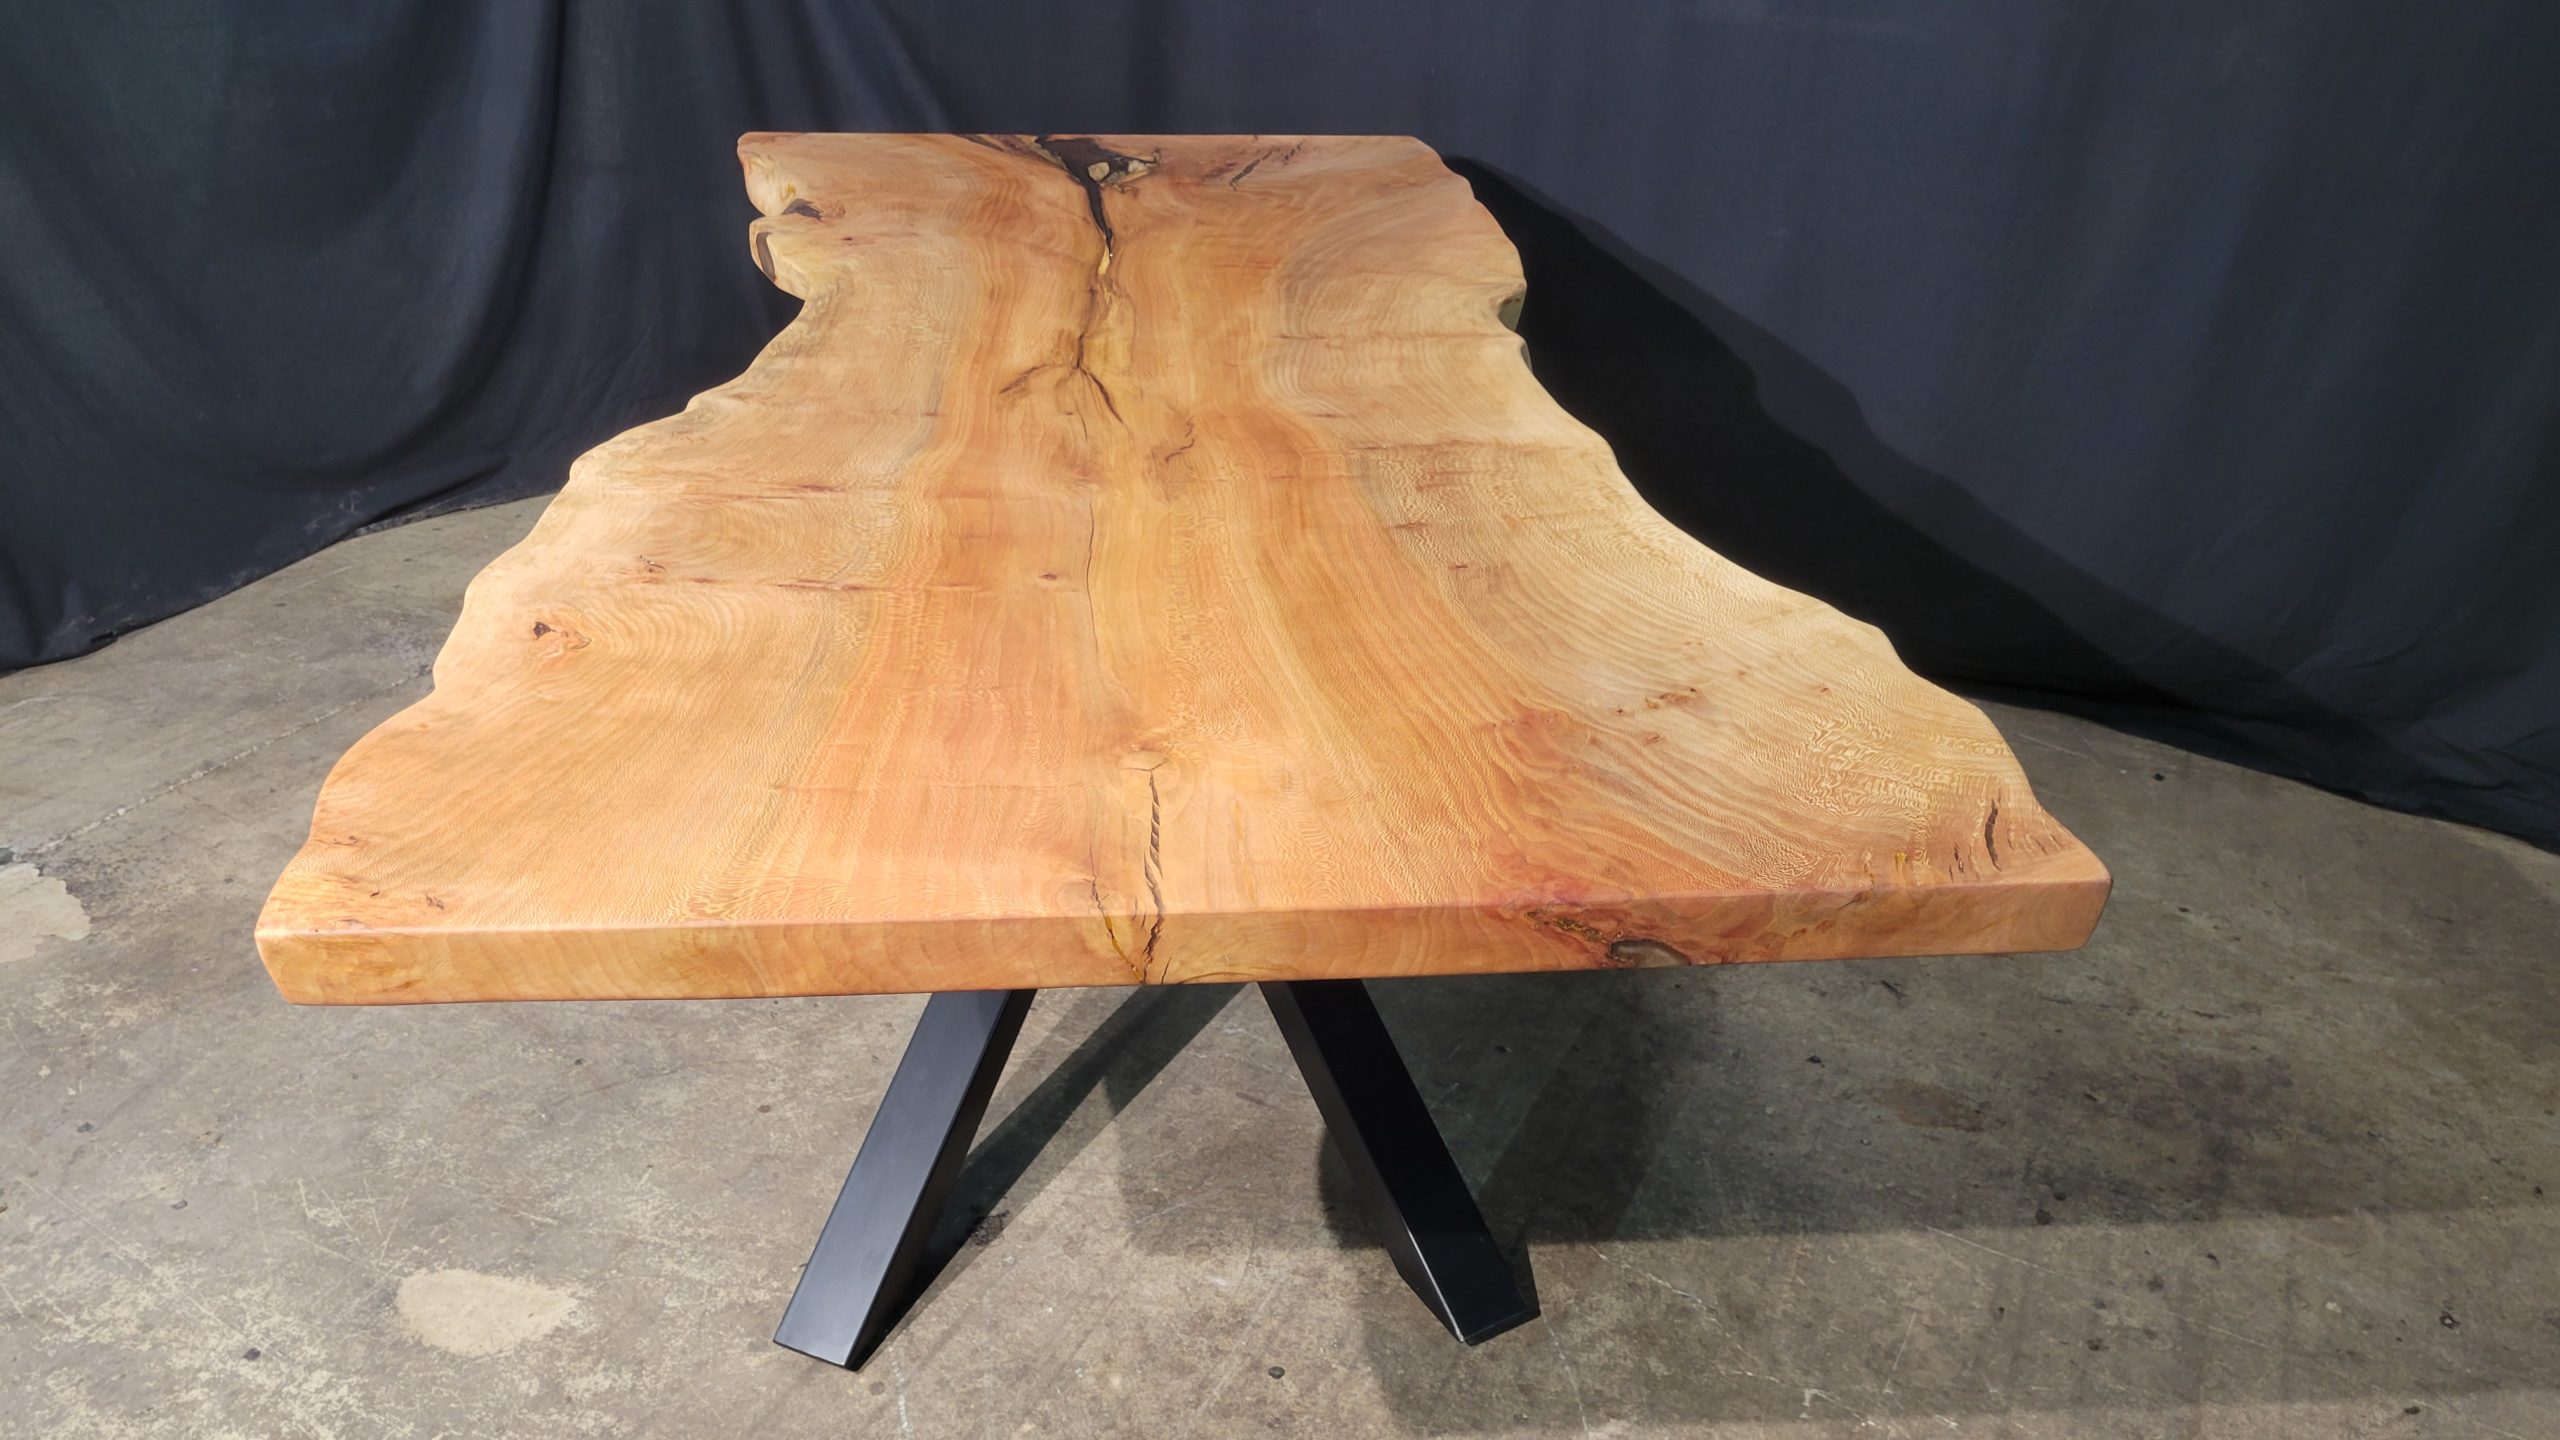 We Now Make Epoxy River Tables - Jewell Hardwoods